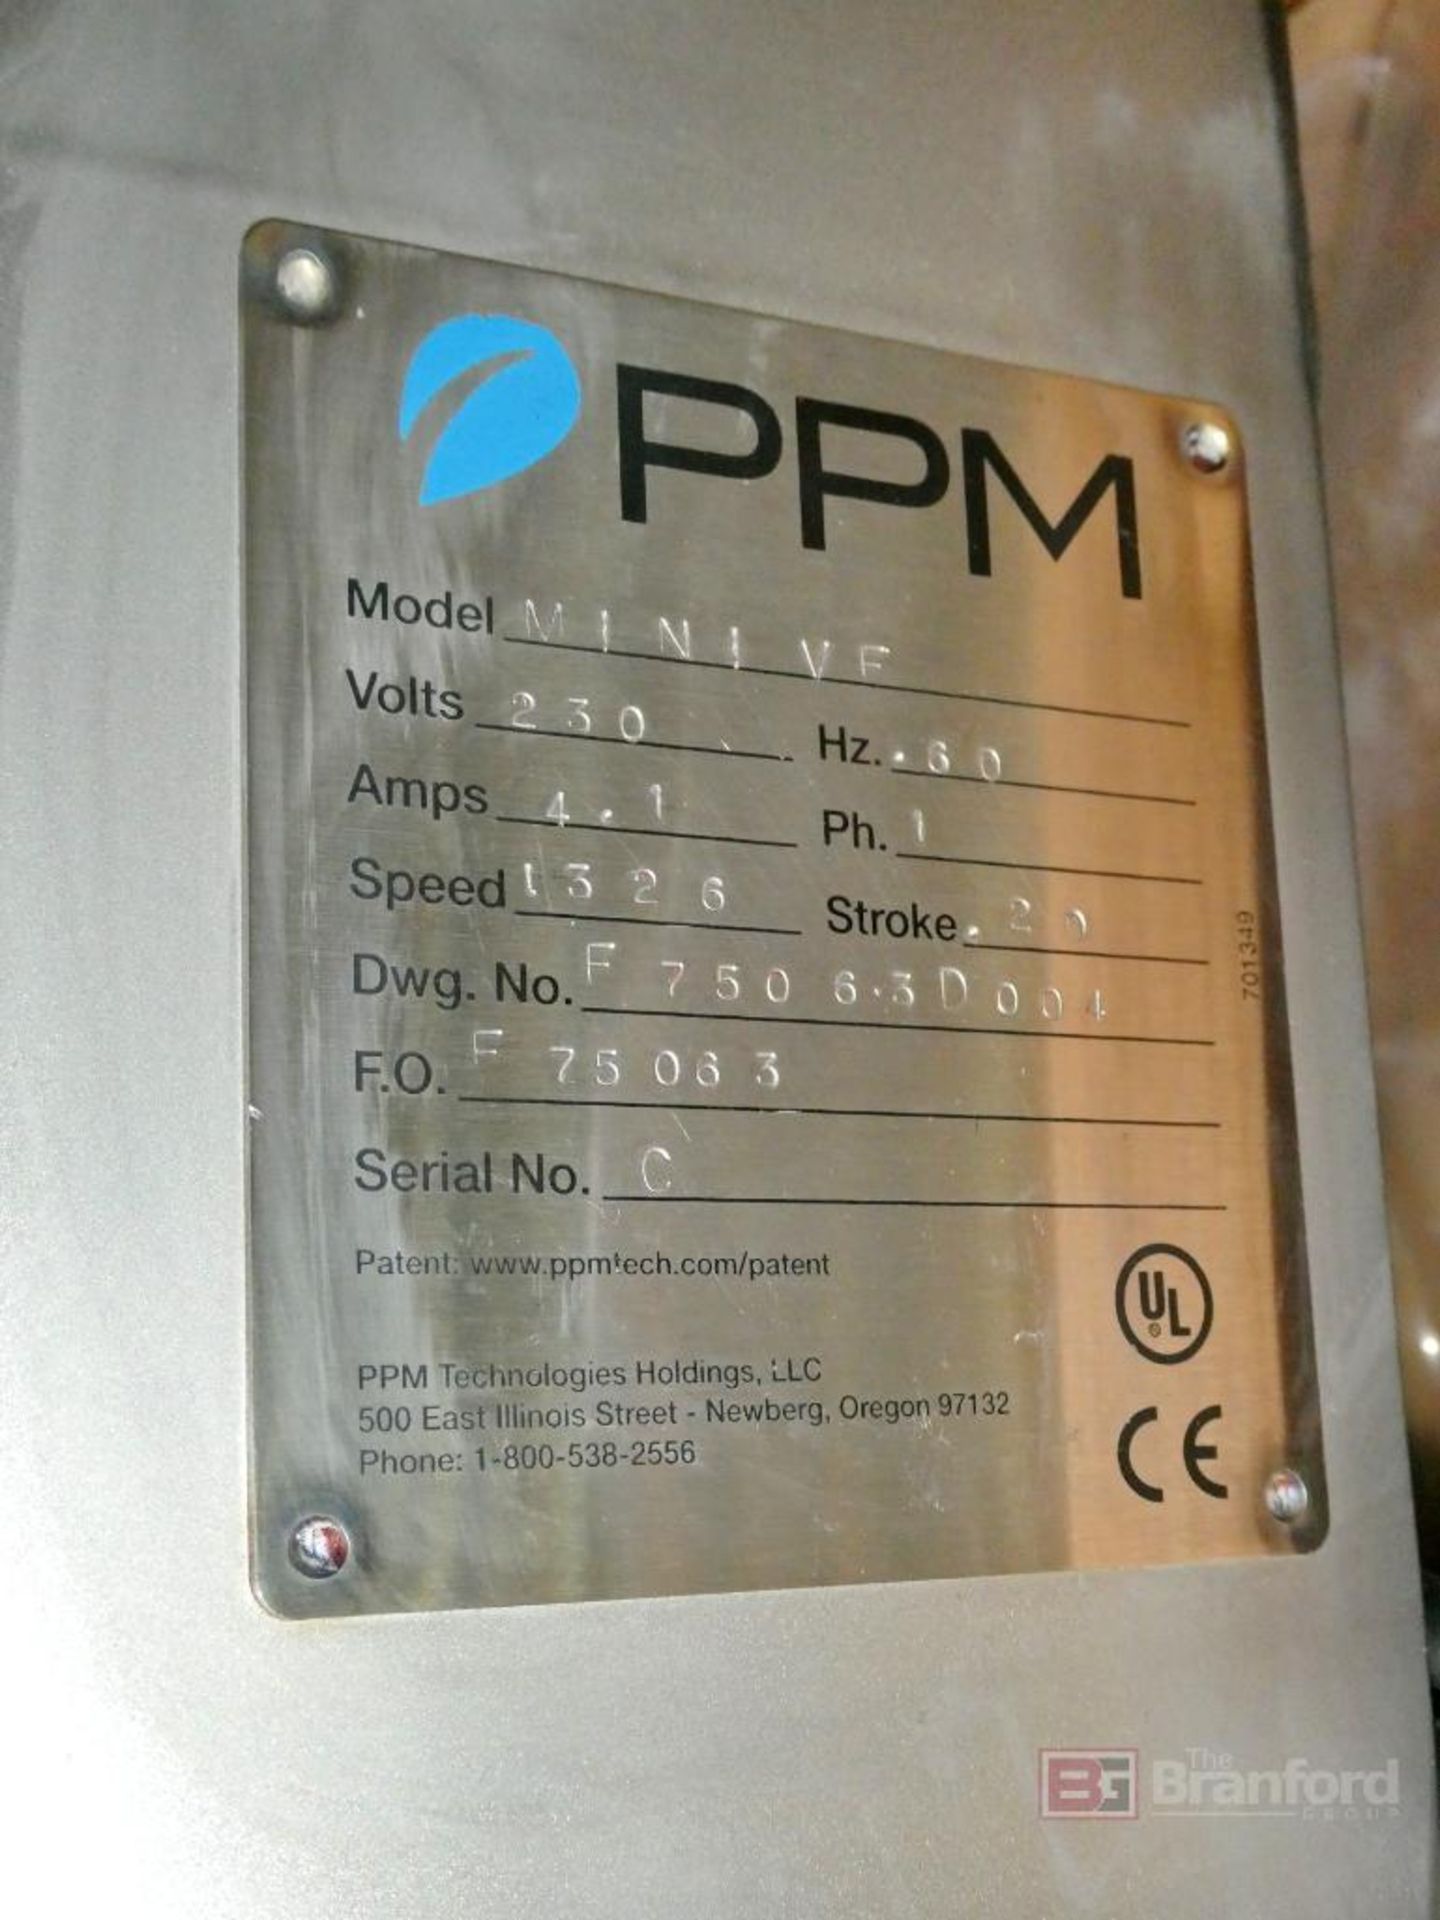 PPM Model MINI VF, Vibrator Conveyor - Image 3 of 3